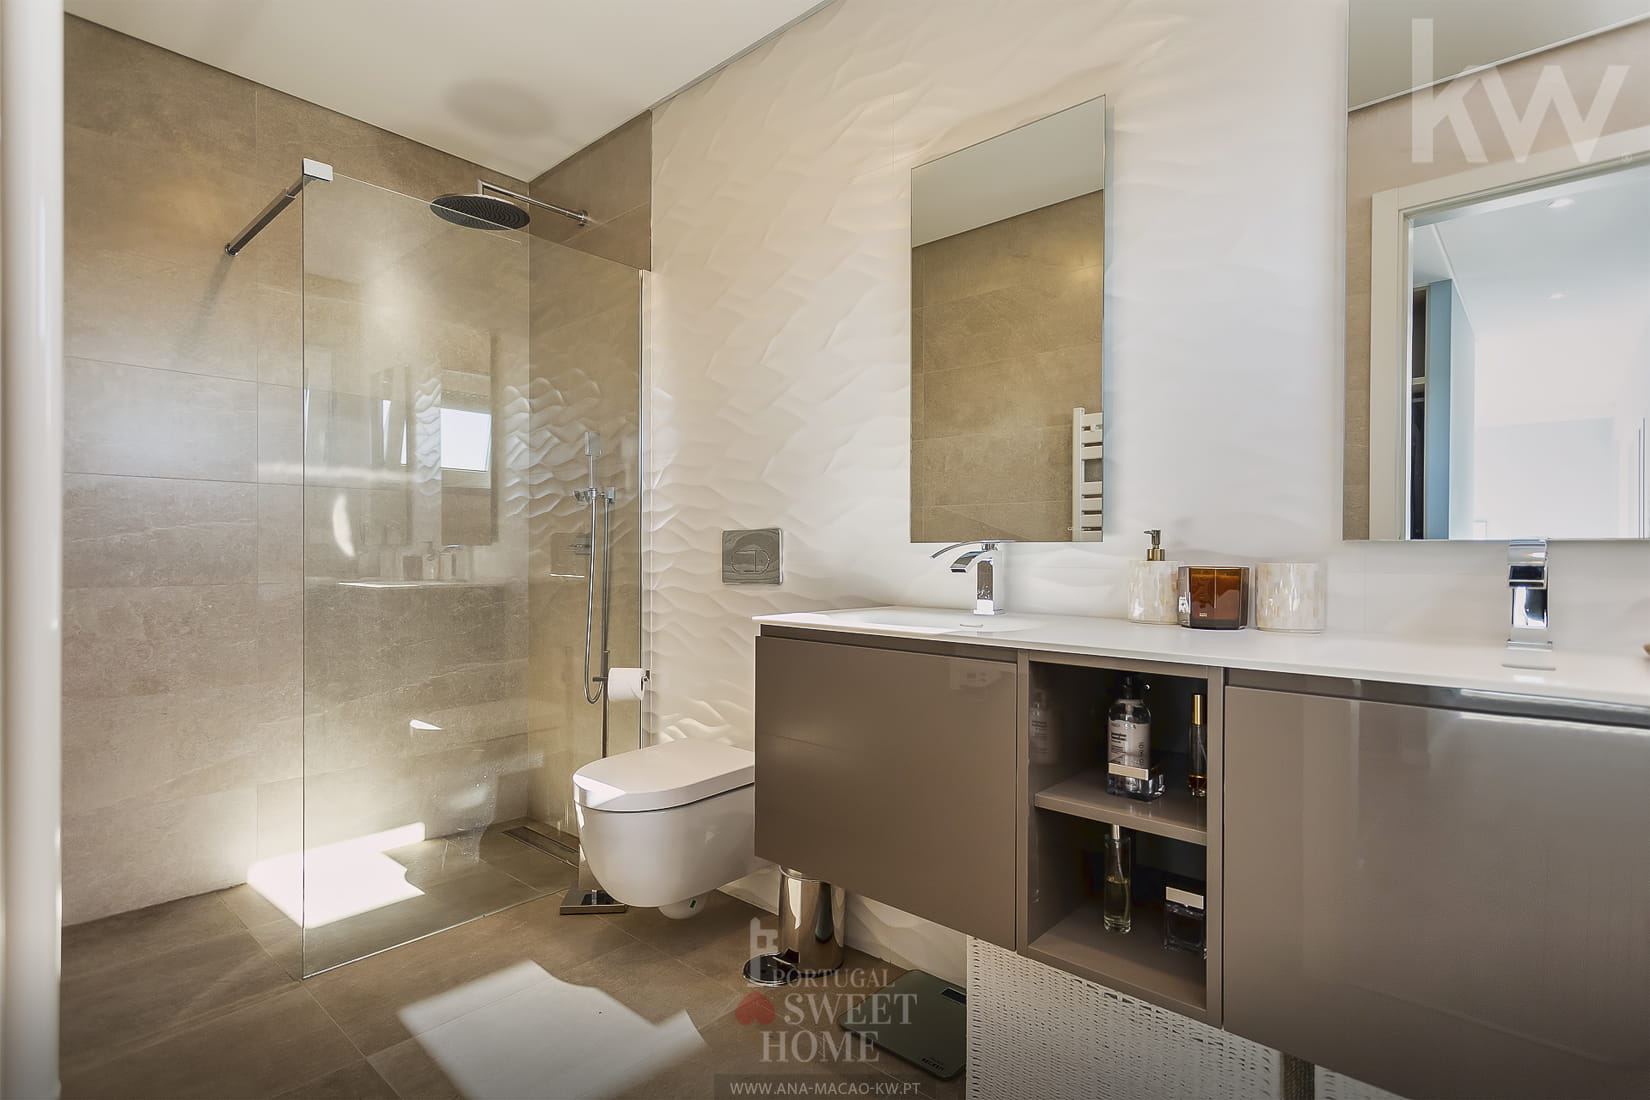 Bathroom (5.43 m²) complete in the Master Suite (2nd floor)